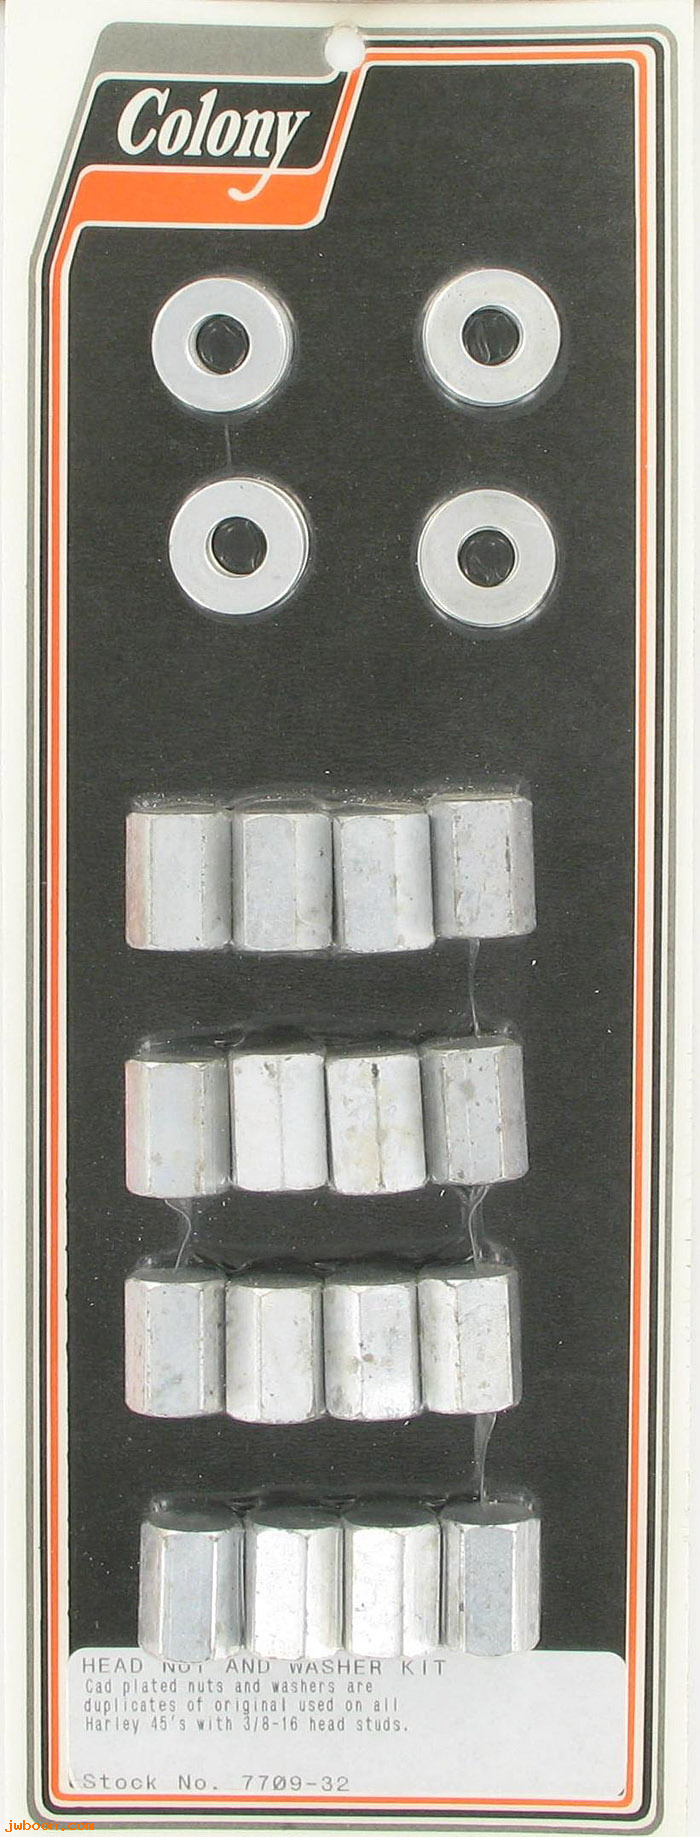 C 7709-32 (16820-26 / 15-26): Head nut and washer kit - WL 37-50. w.cast iron head,3/8-16 studs